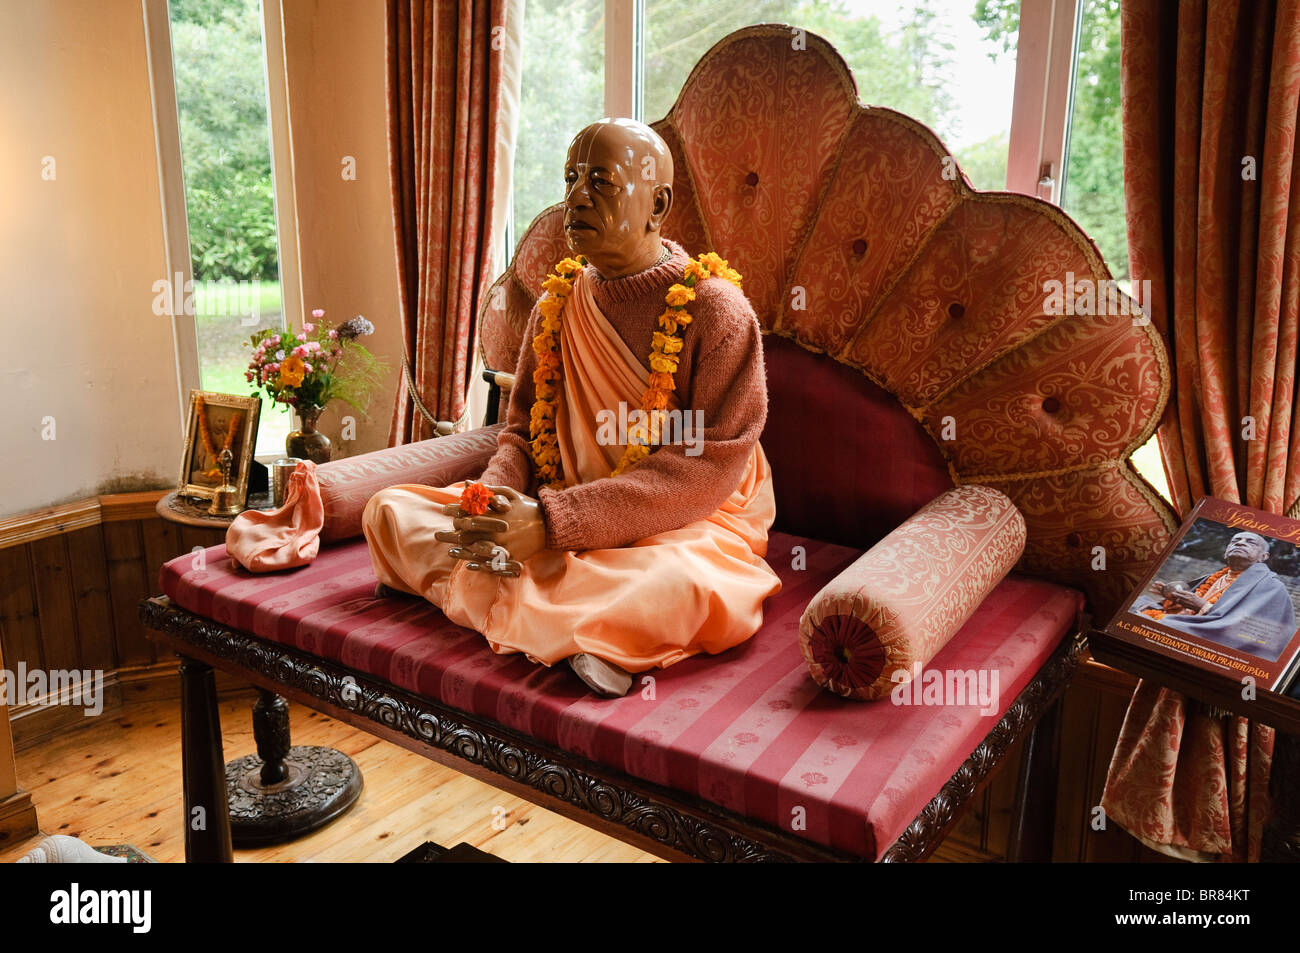 Statue of AC Bhaktivedanta Swami Prabhupada, founder of the Hare Krishna movement, in a temple room. Stock Photo